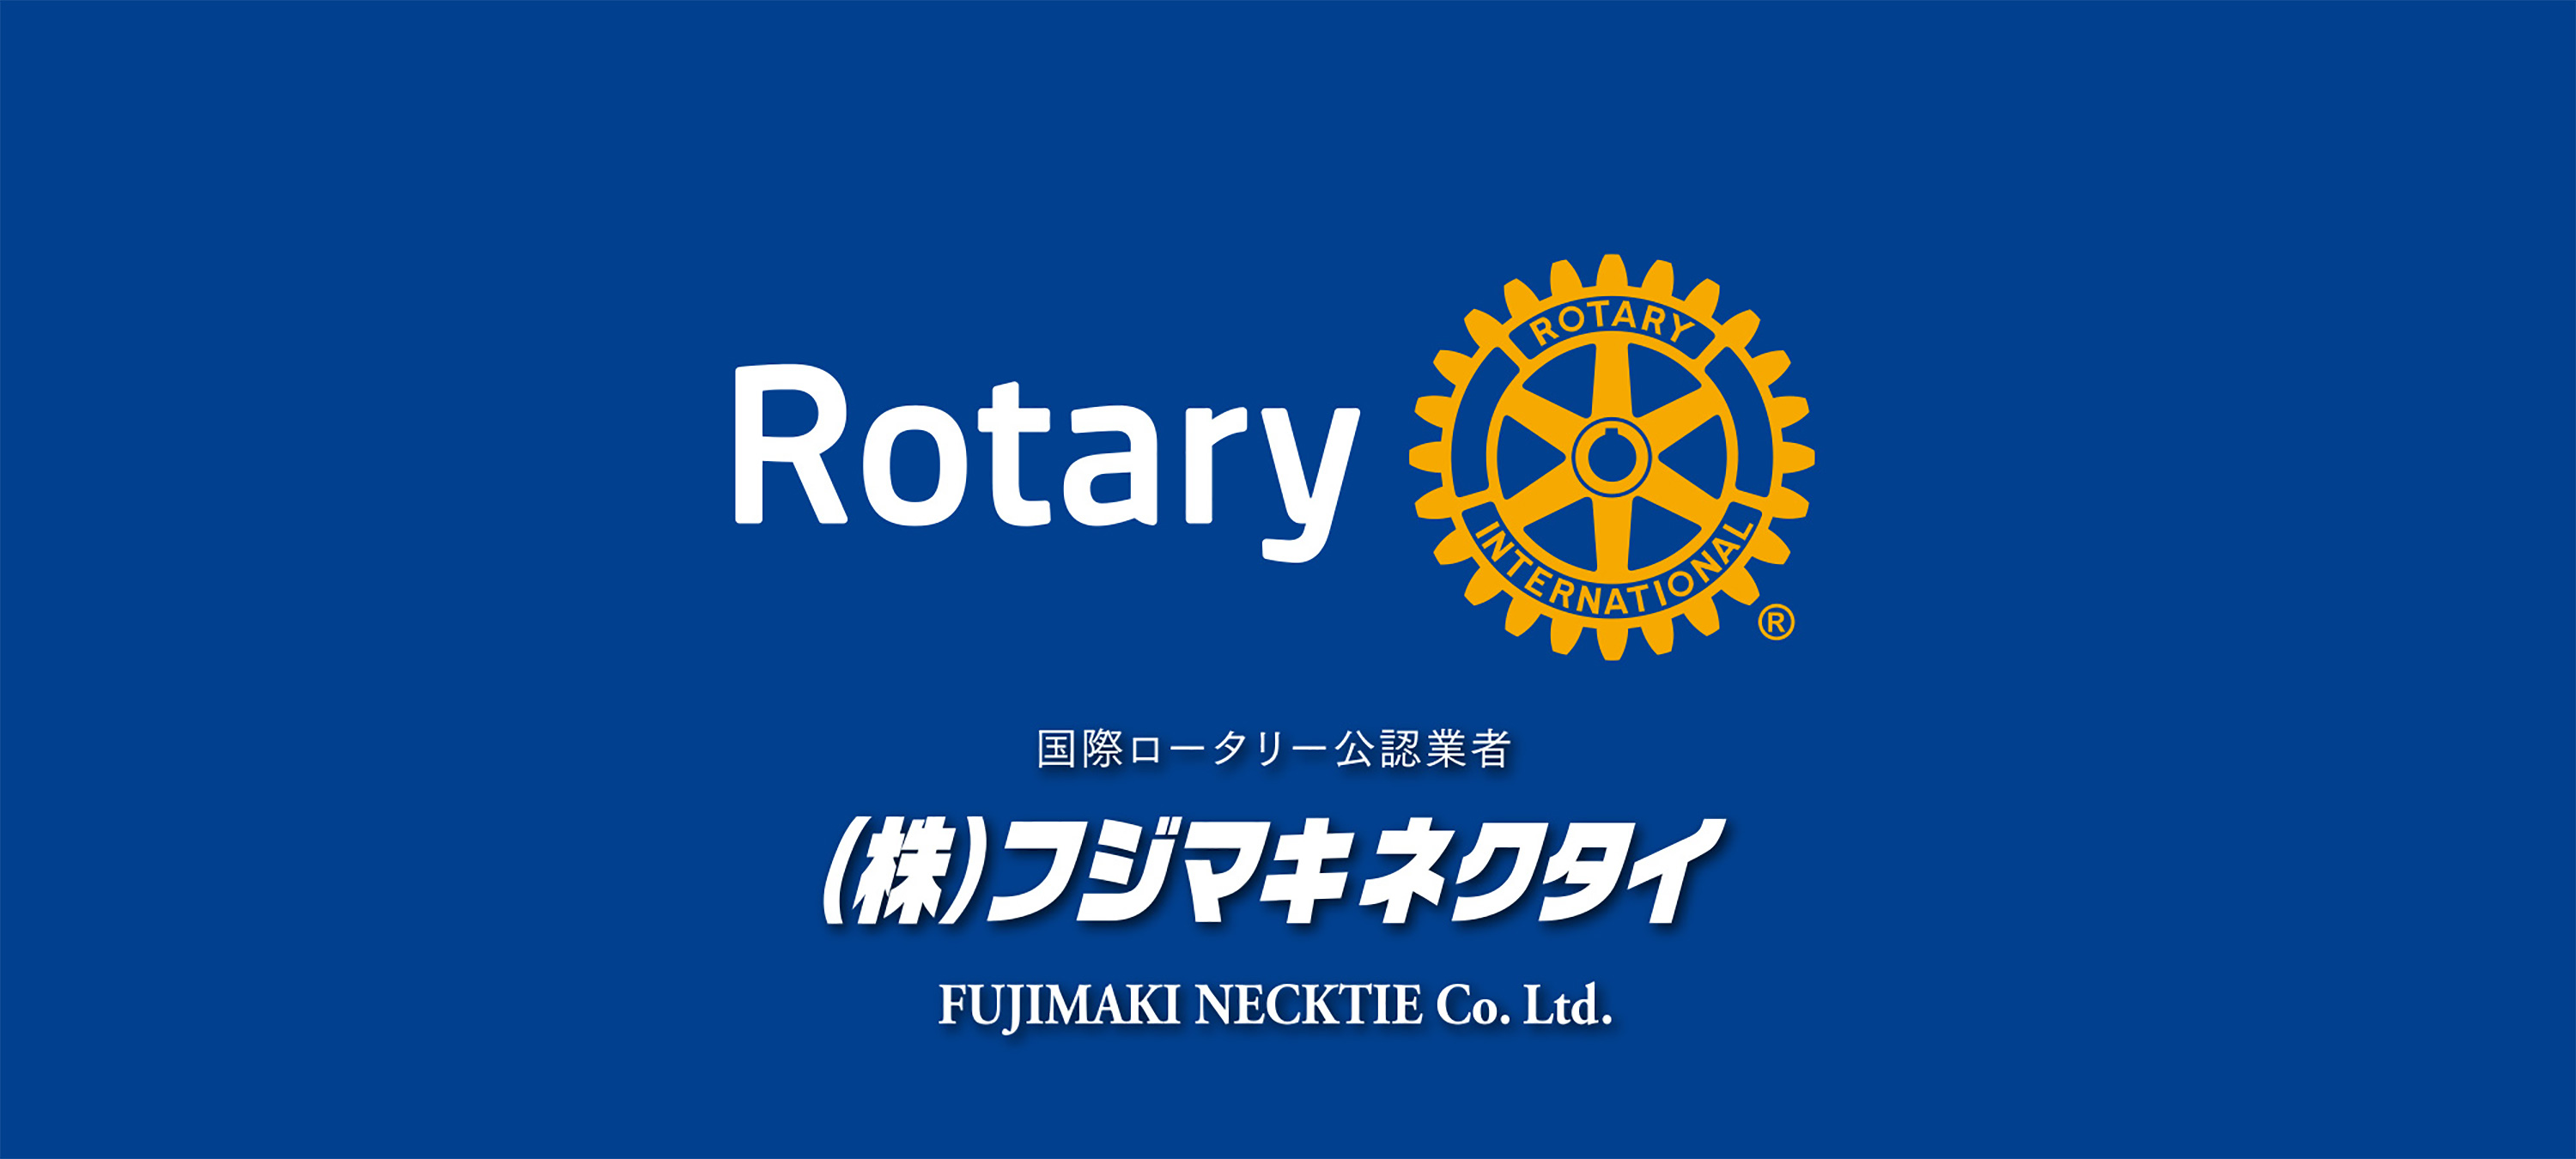 Rotary 国際ロータリー公認業者 株式会社フジマキネクタイ